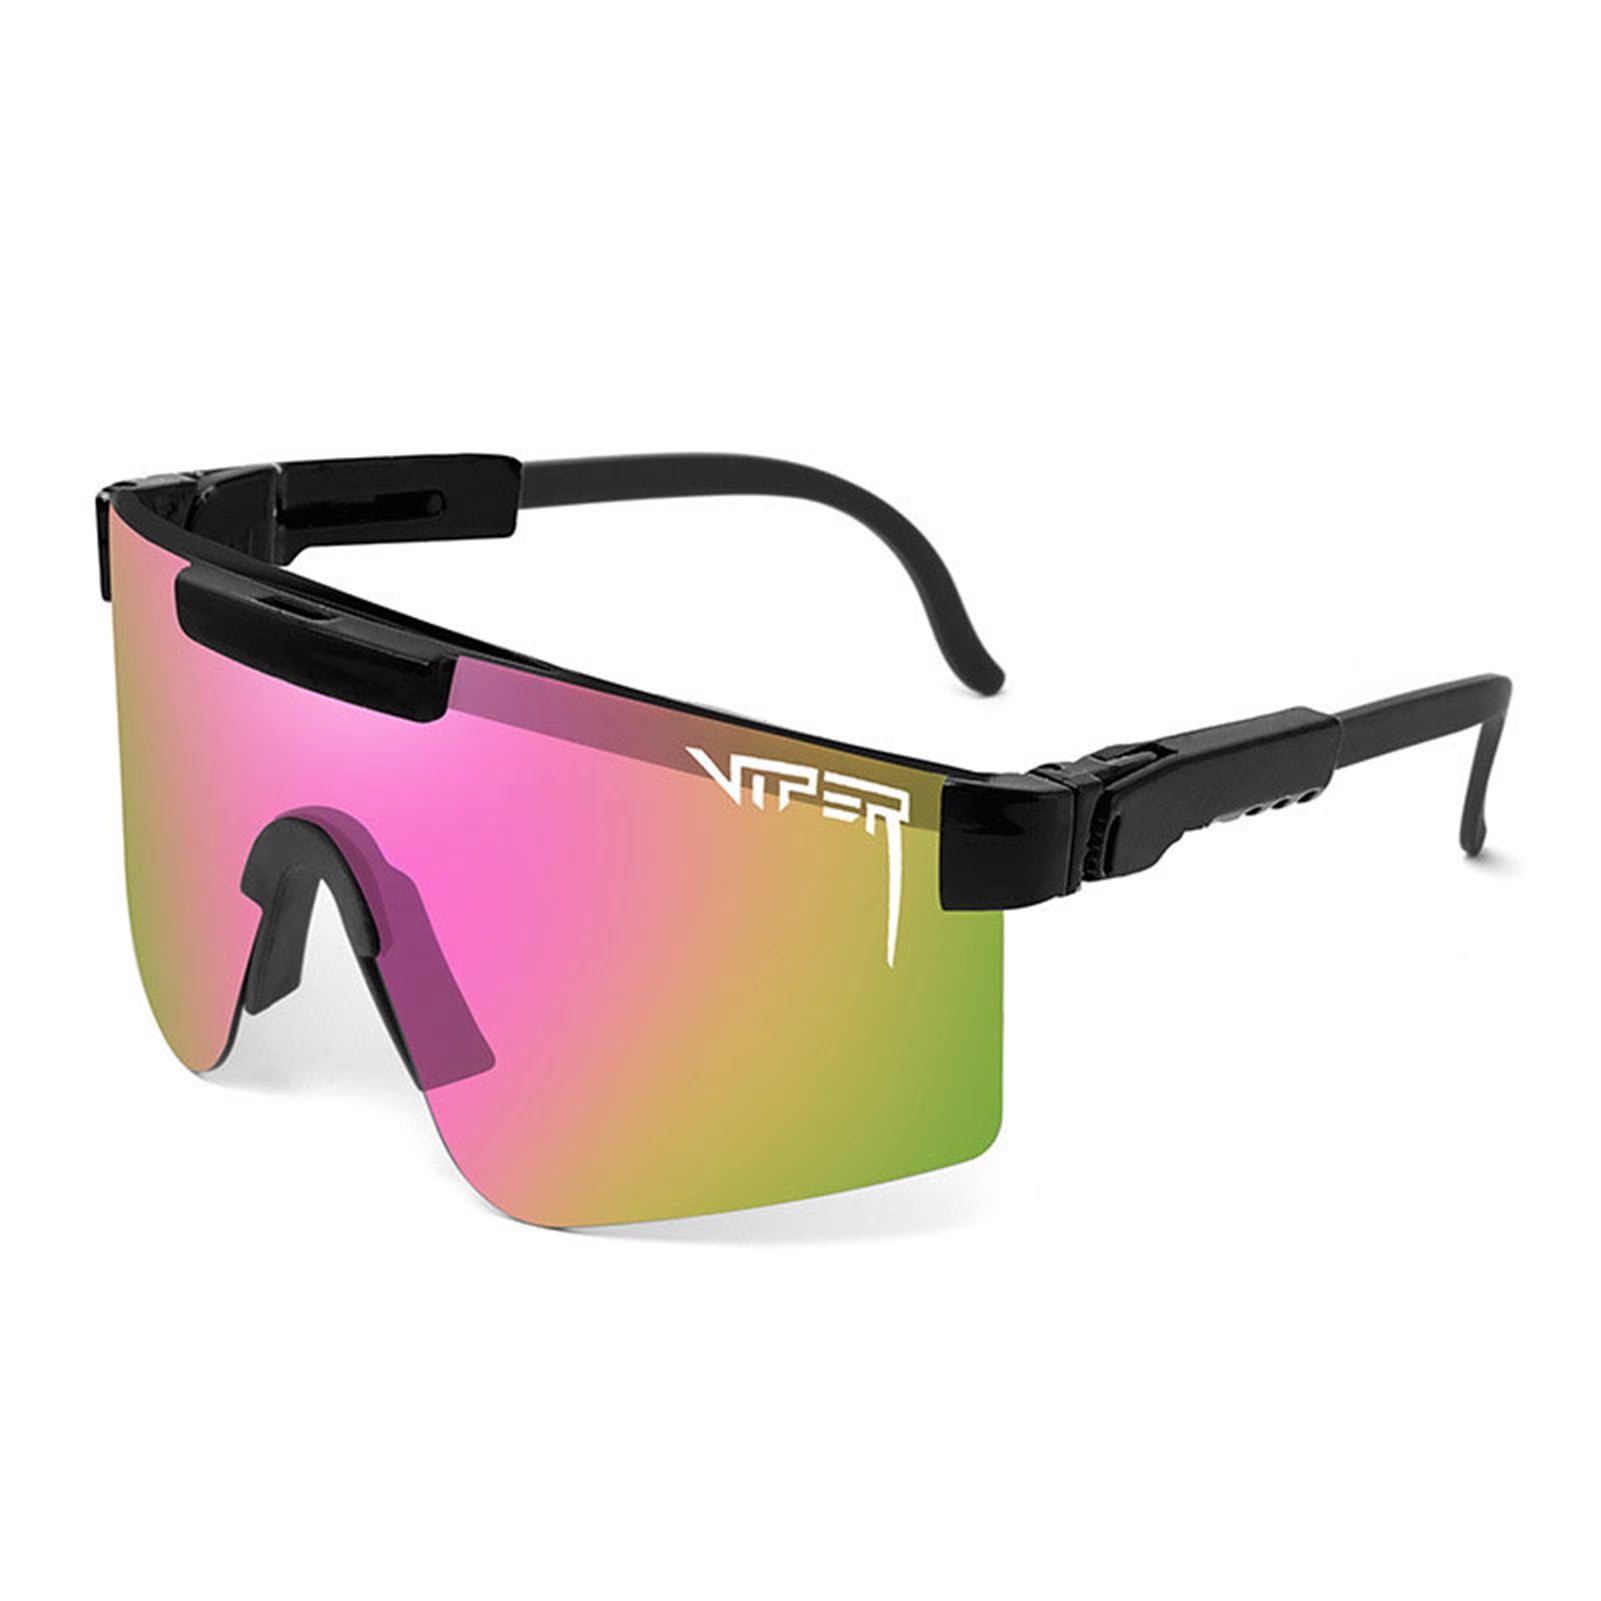 Polarized Cycling Sunglasses UV400 Bike Glasses TR90 Sports Eyewear 4 Lenses 